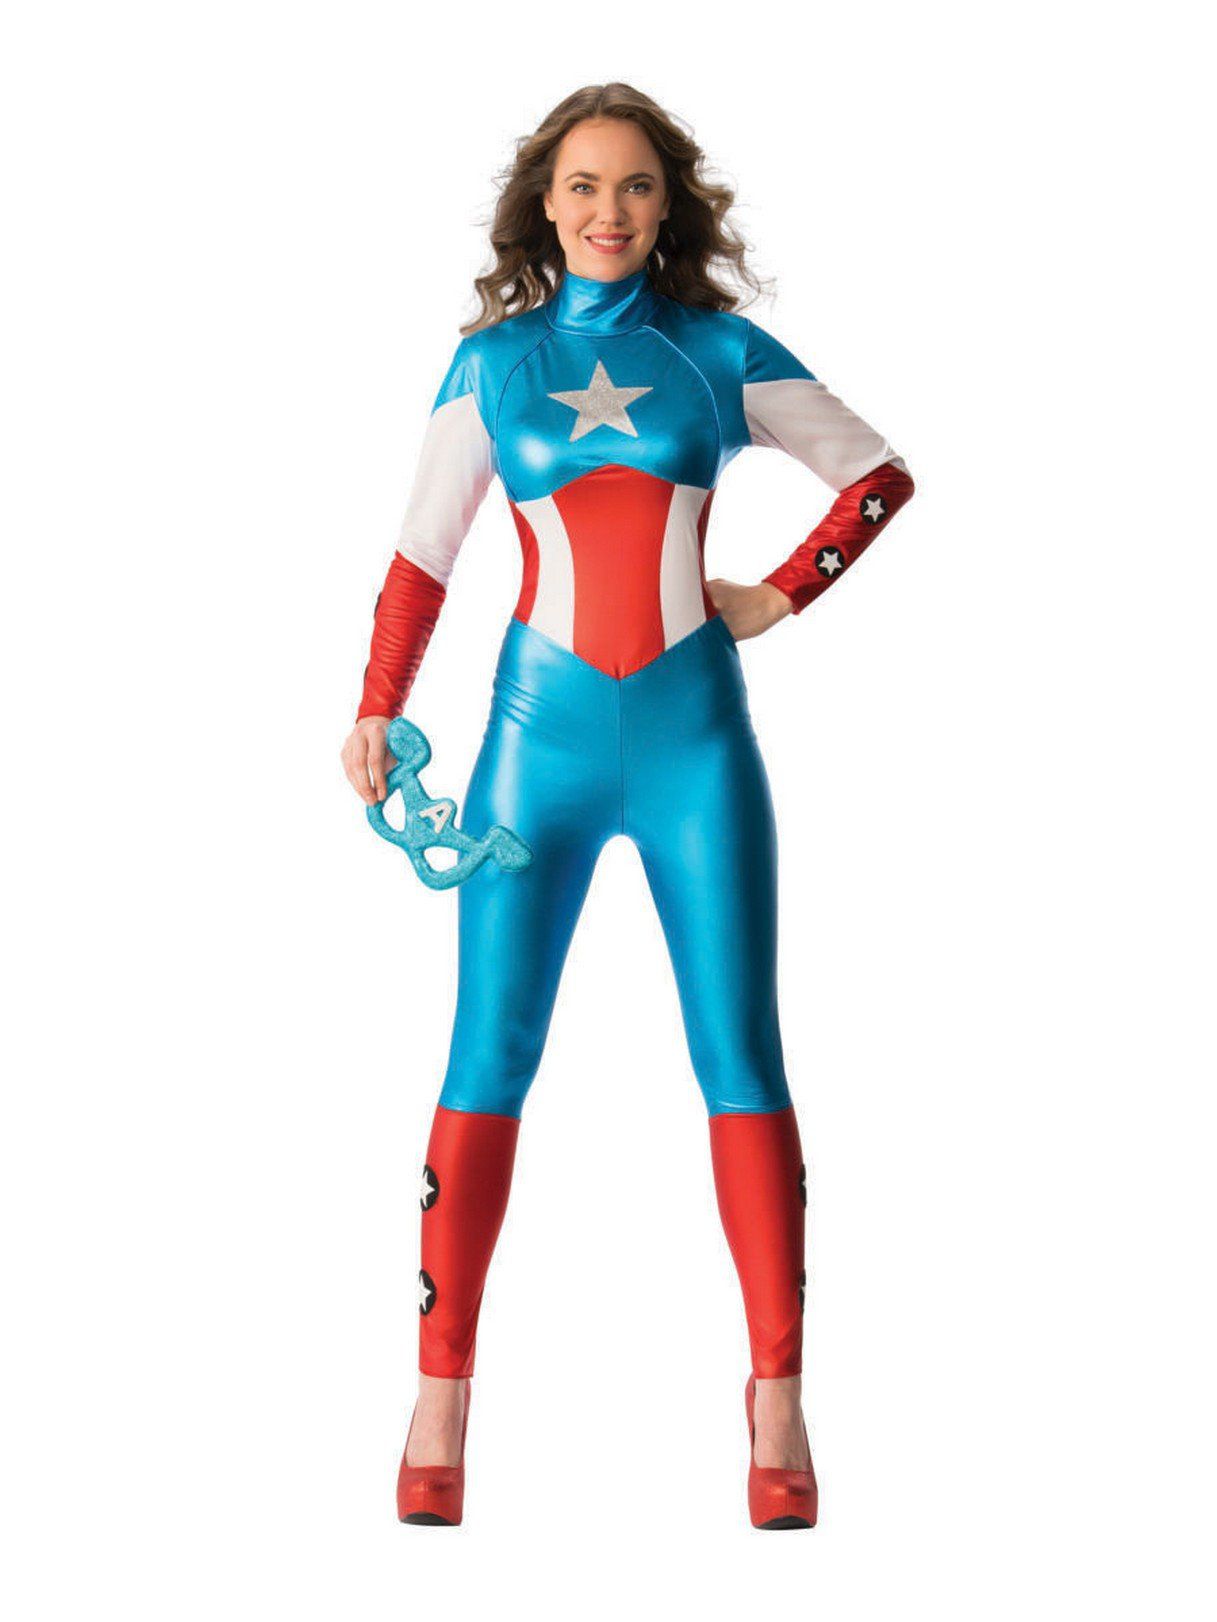 Kid's Avengers Captain America Costume - costumes.com